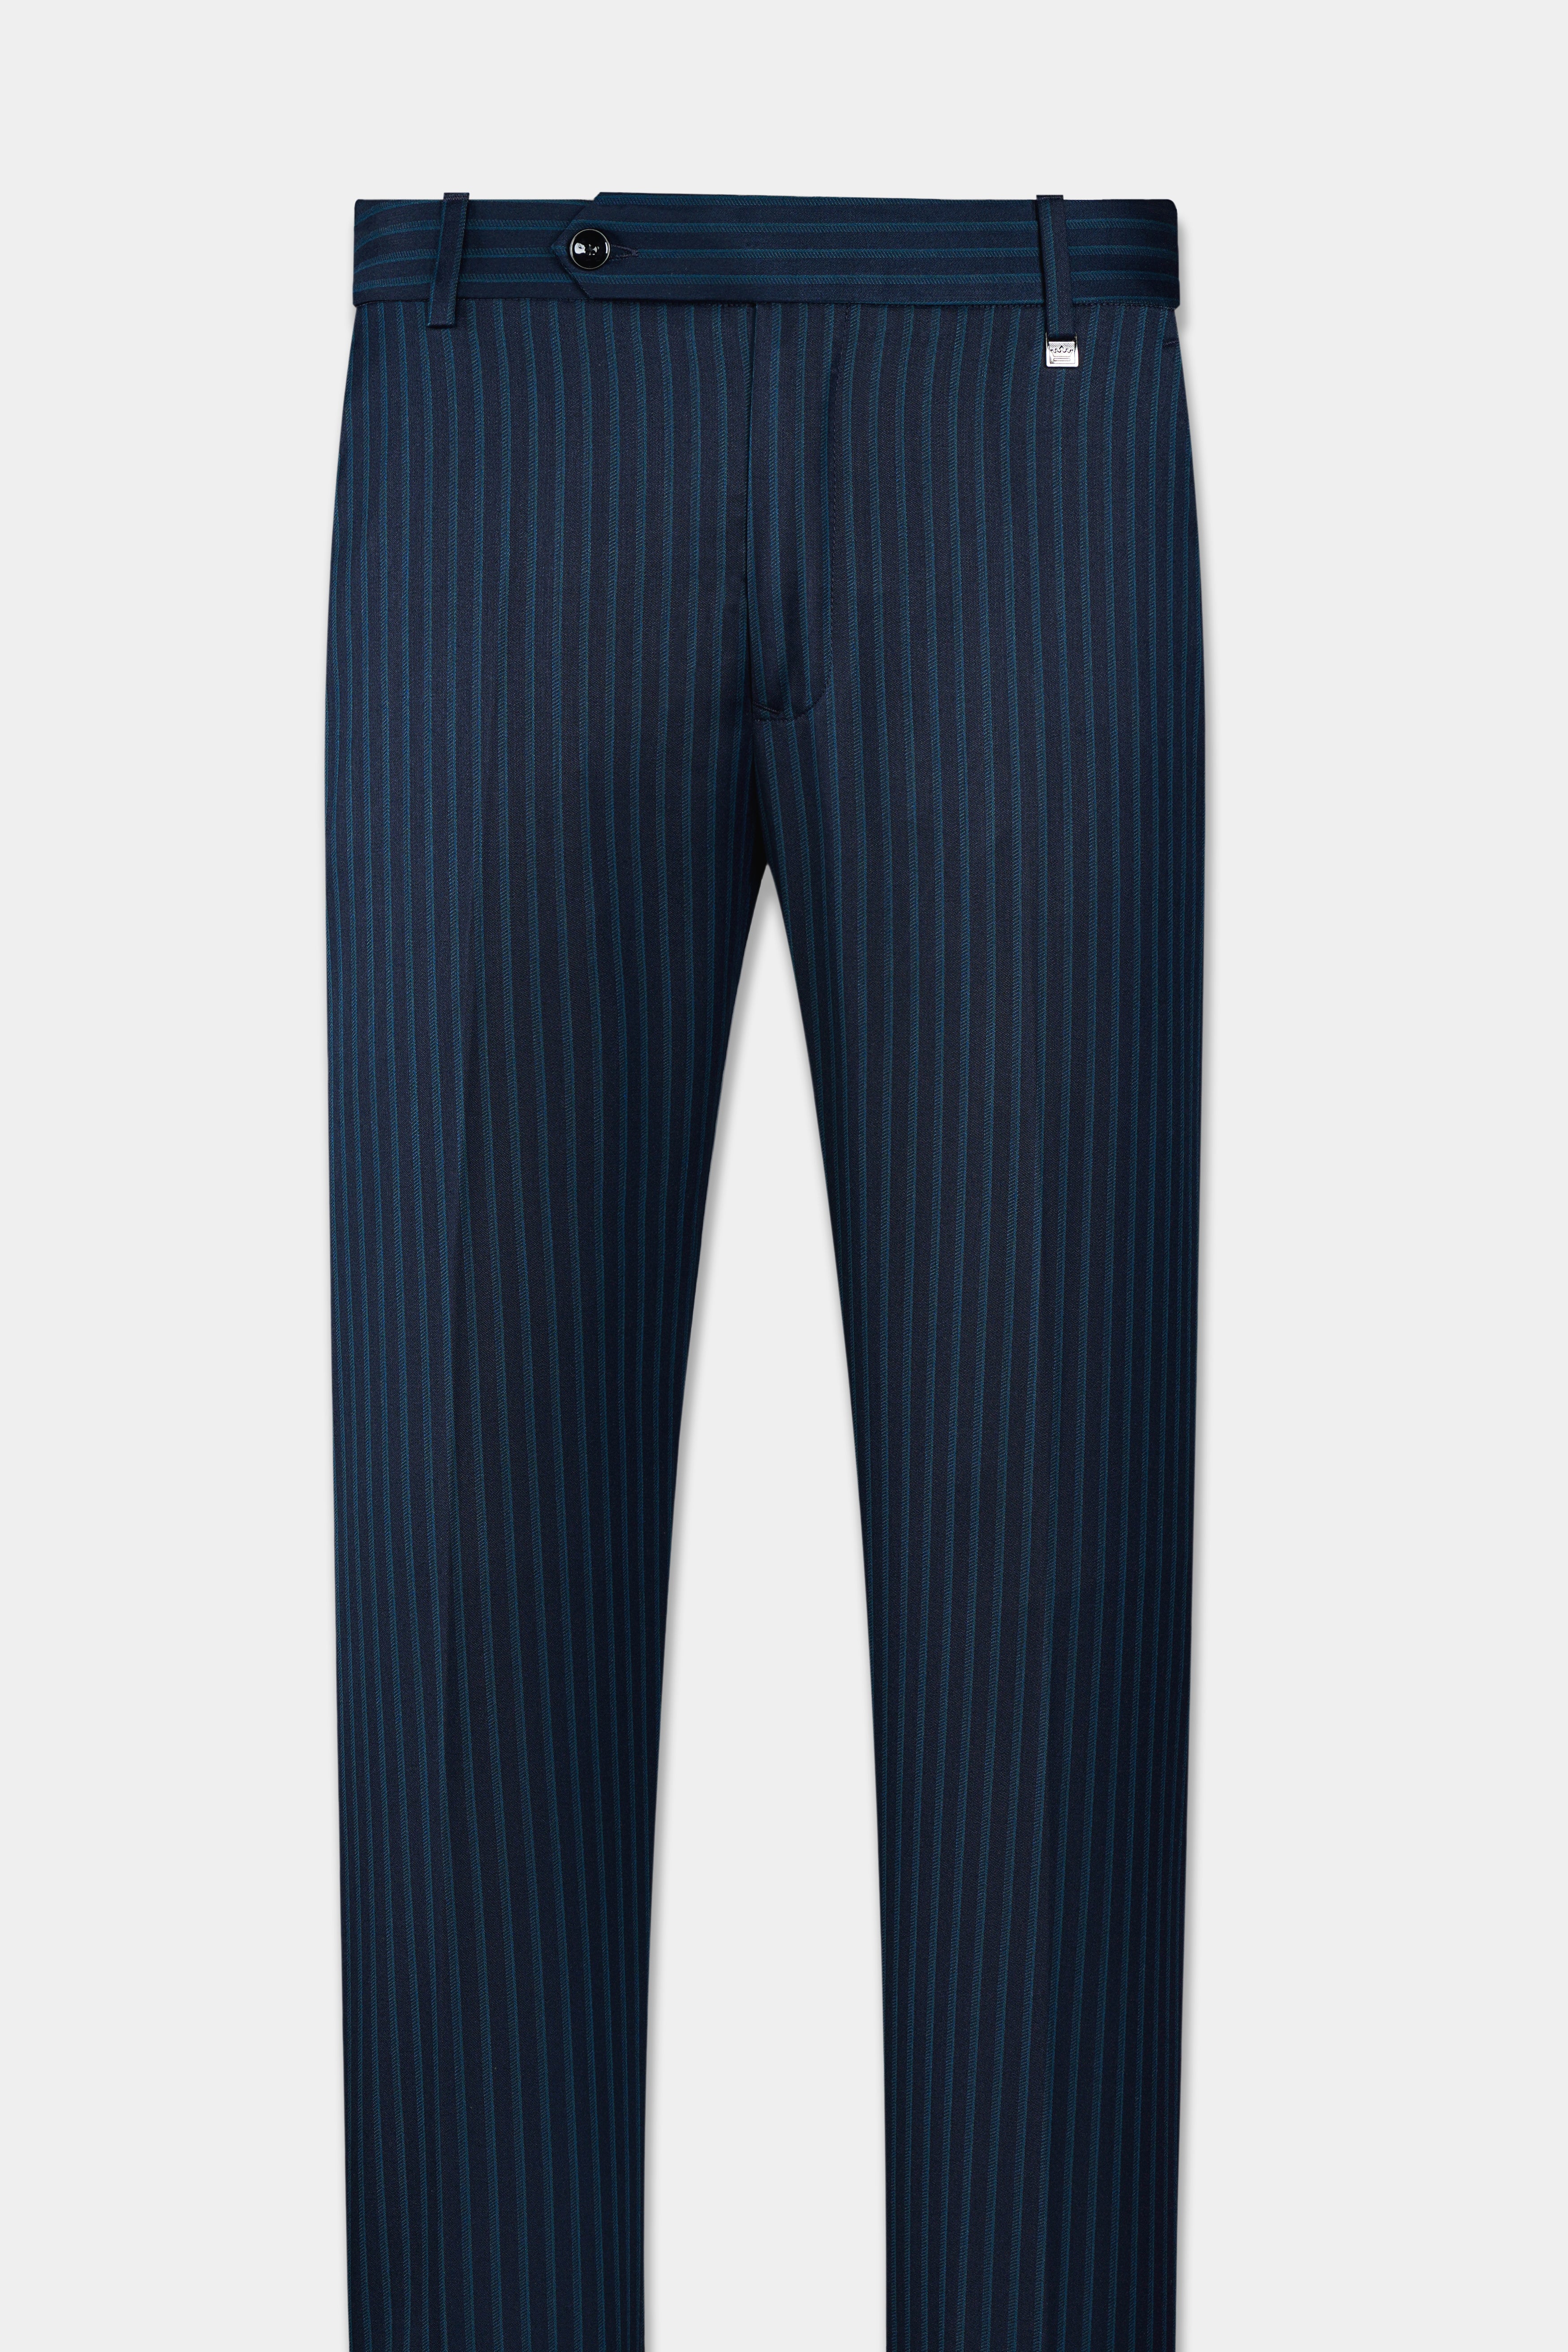 Ebony Blue and Marine Blue PinStriped Wool Rich Stretchable Waistband Pant